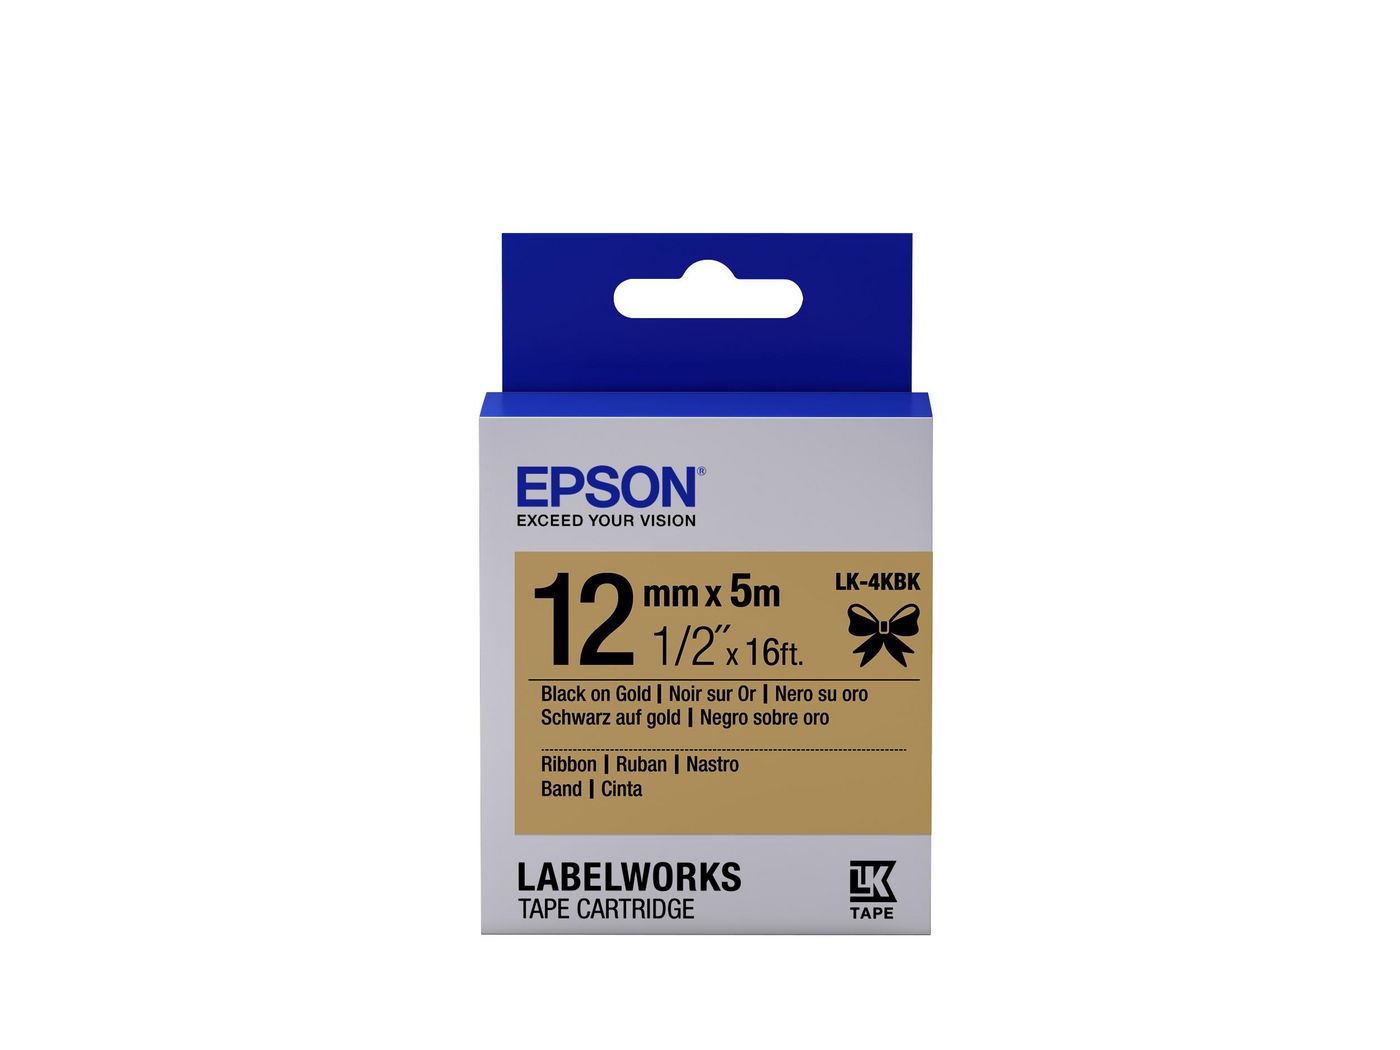 EPSON Ribbon LK-4KBK Satin gold/black